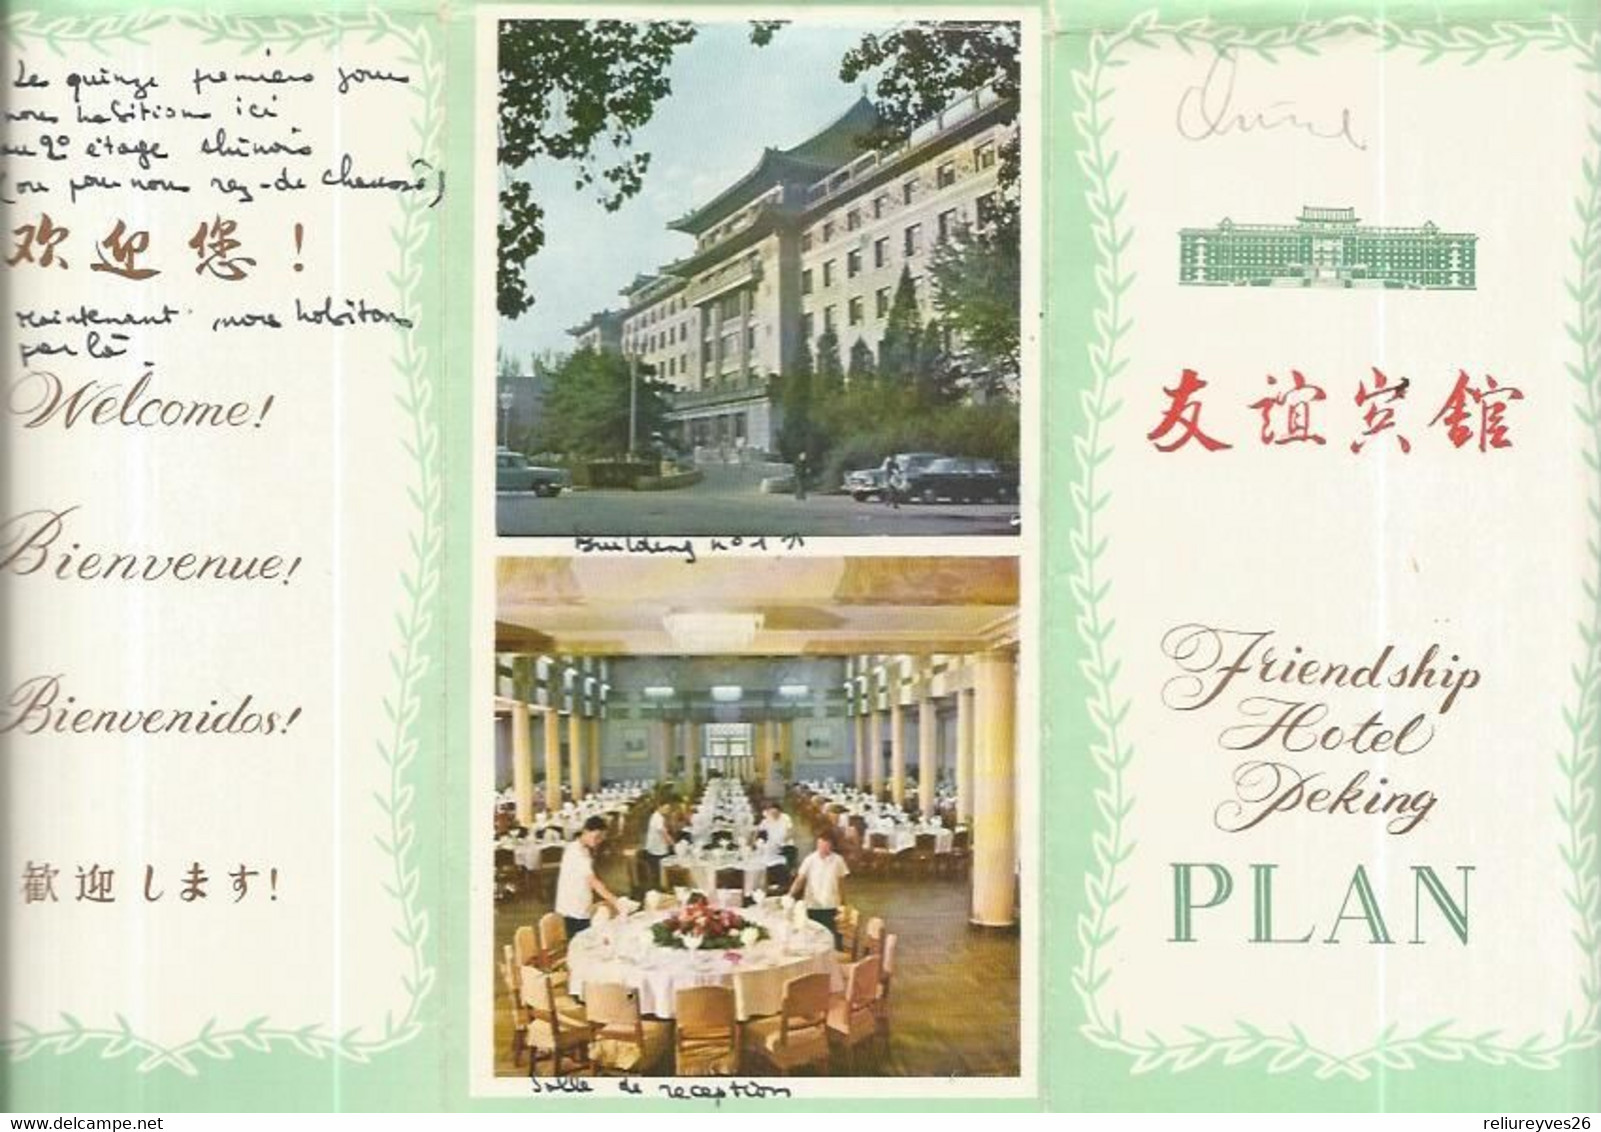 Chine - Friend Ship Hotel Peking Plan - Mondo